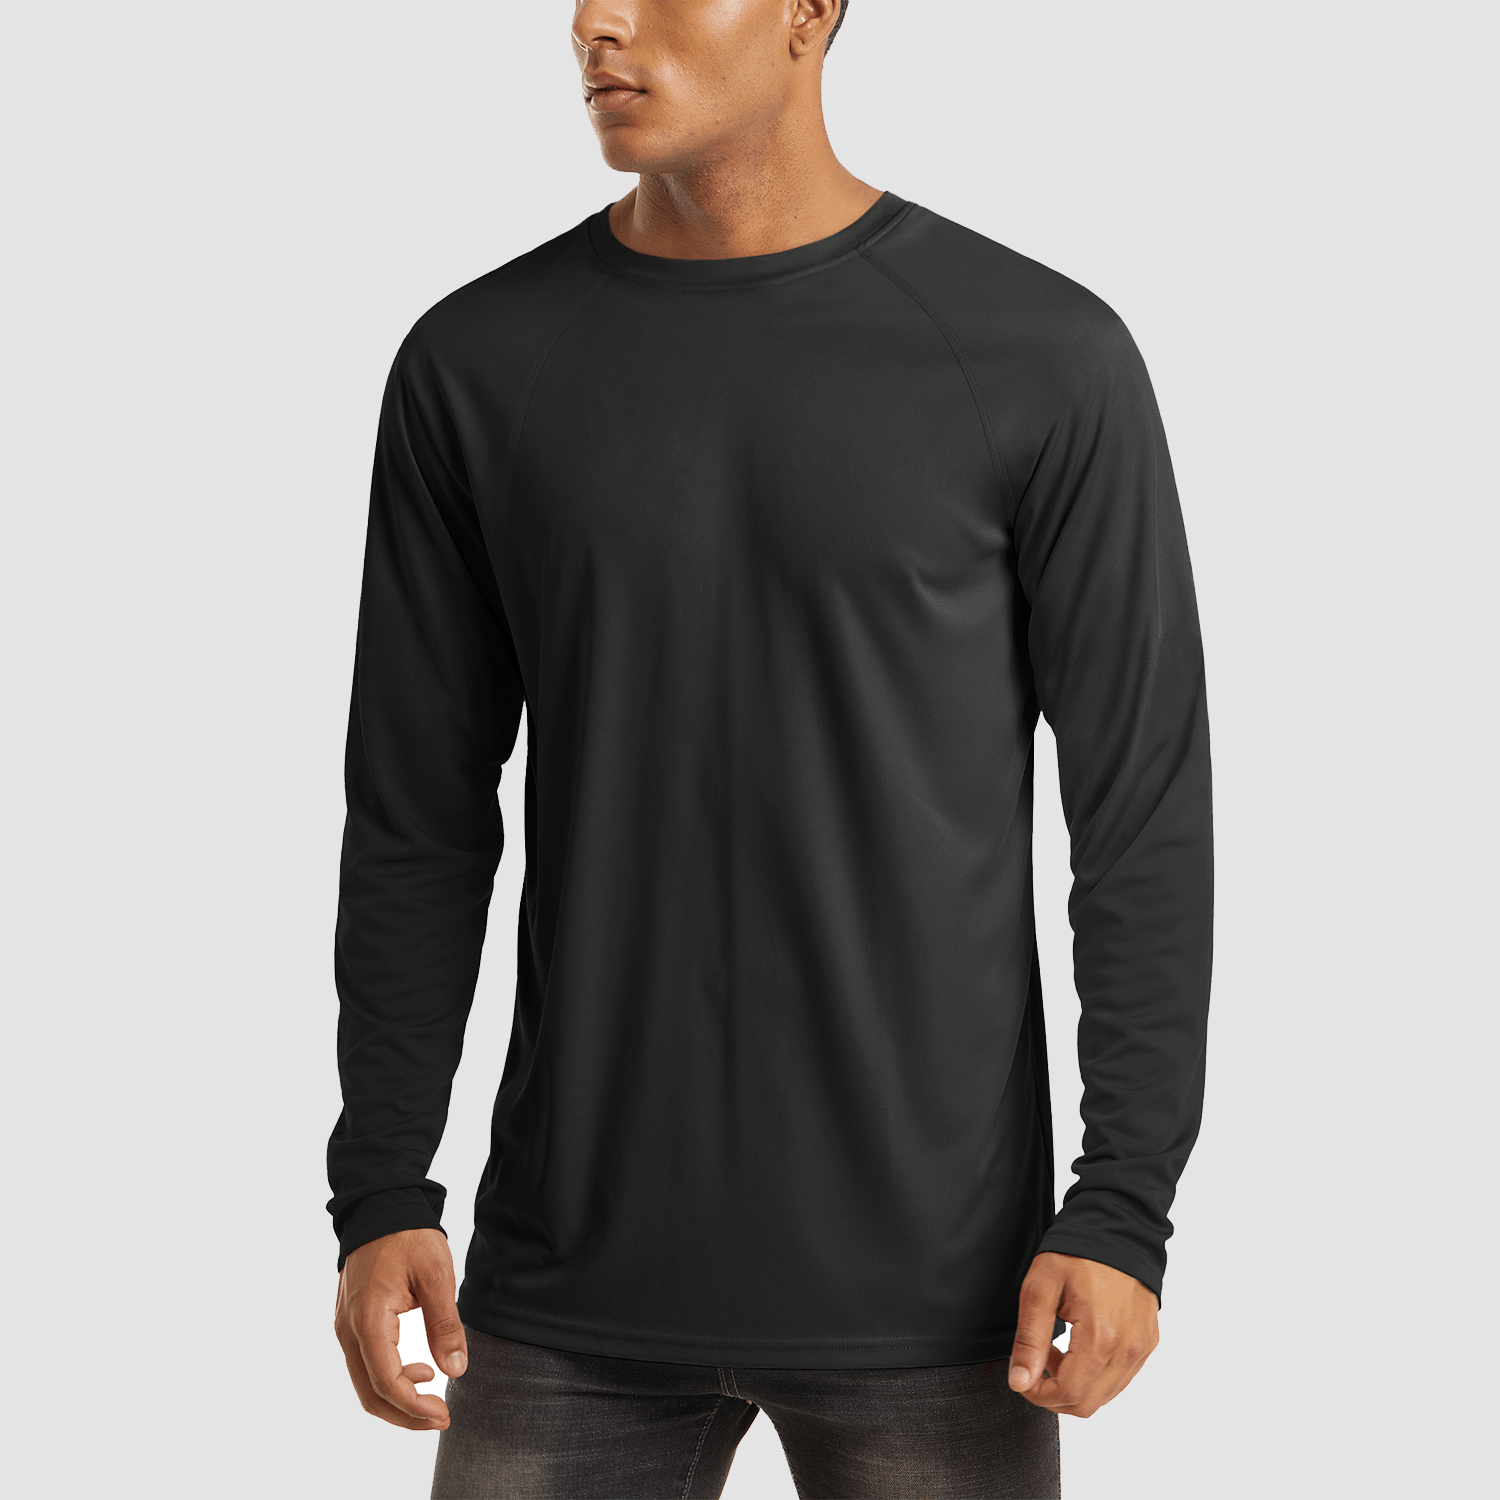 Buy 4 Get 4th Free】Men's Long Sleeve Hooded Shirt UPF 50+